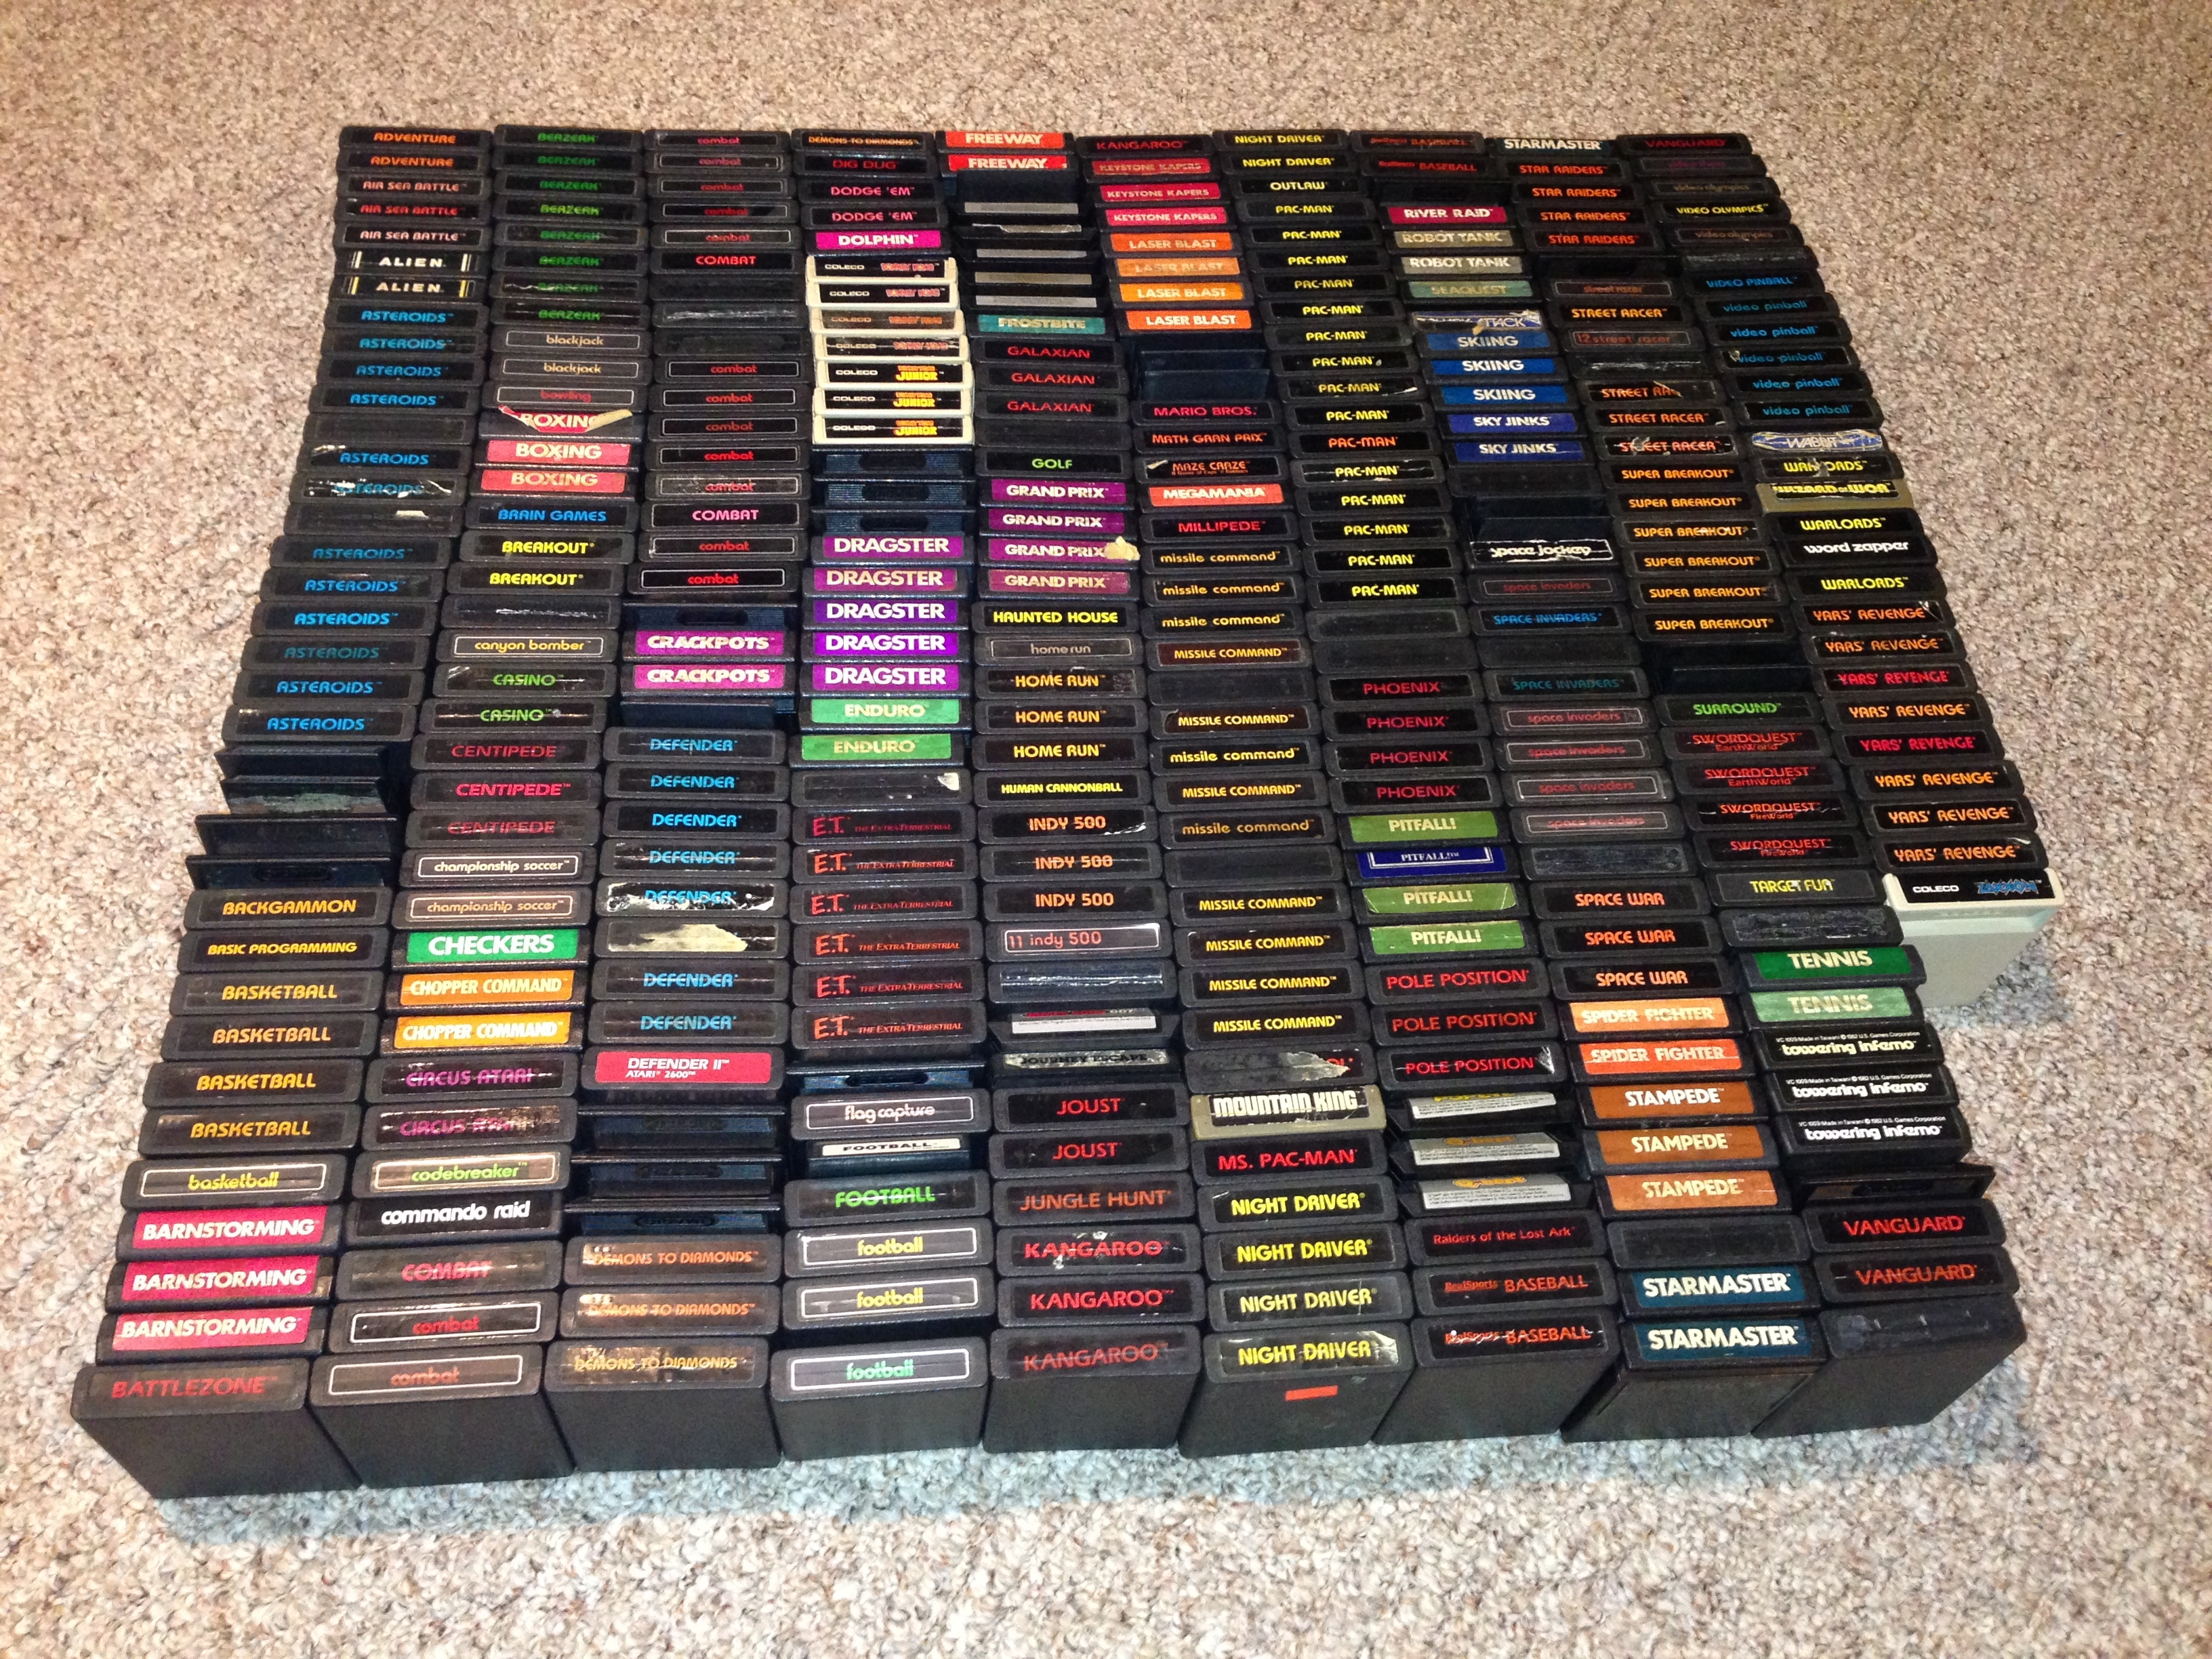 My Atari 2600 Collection